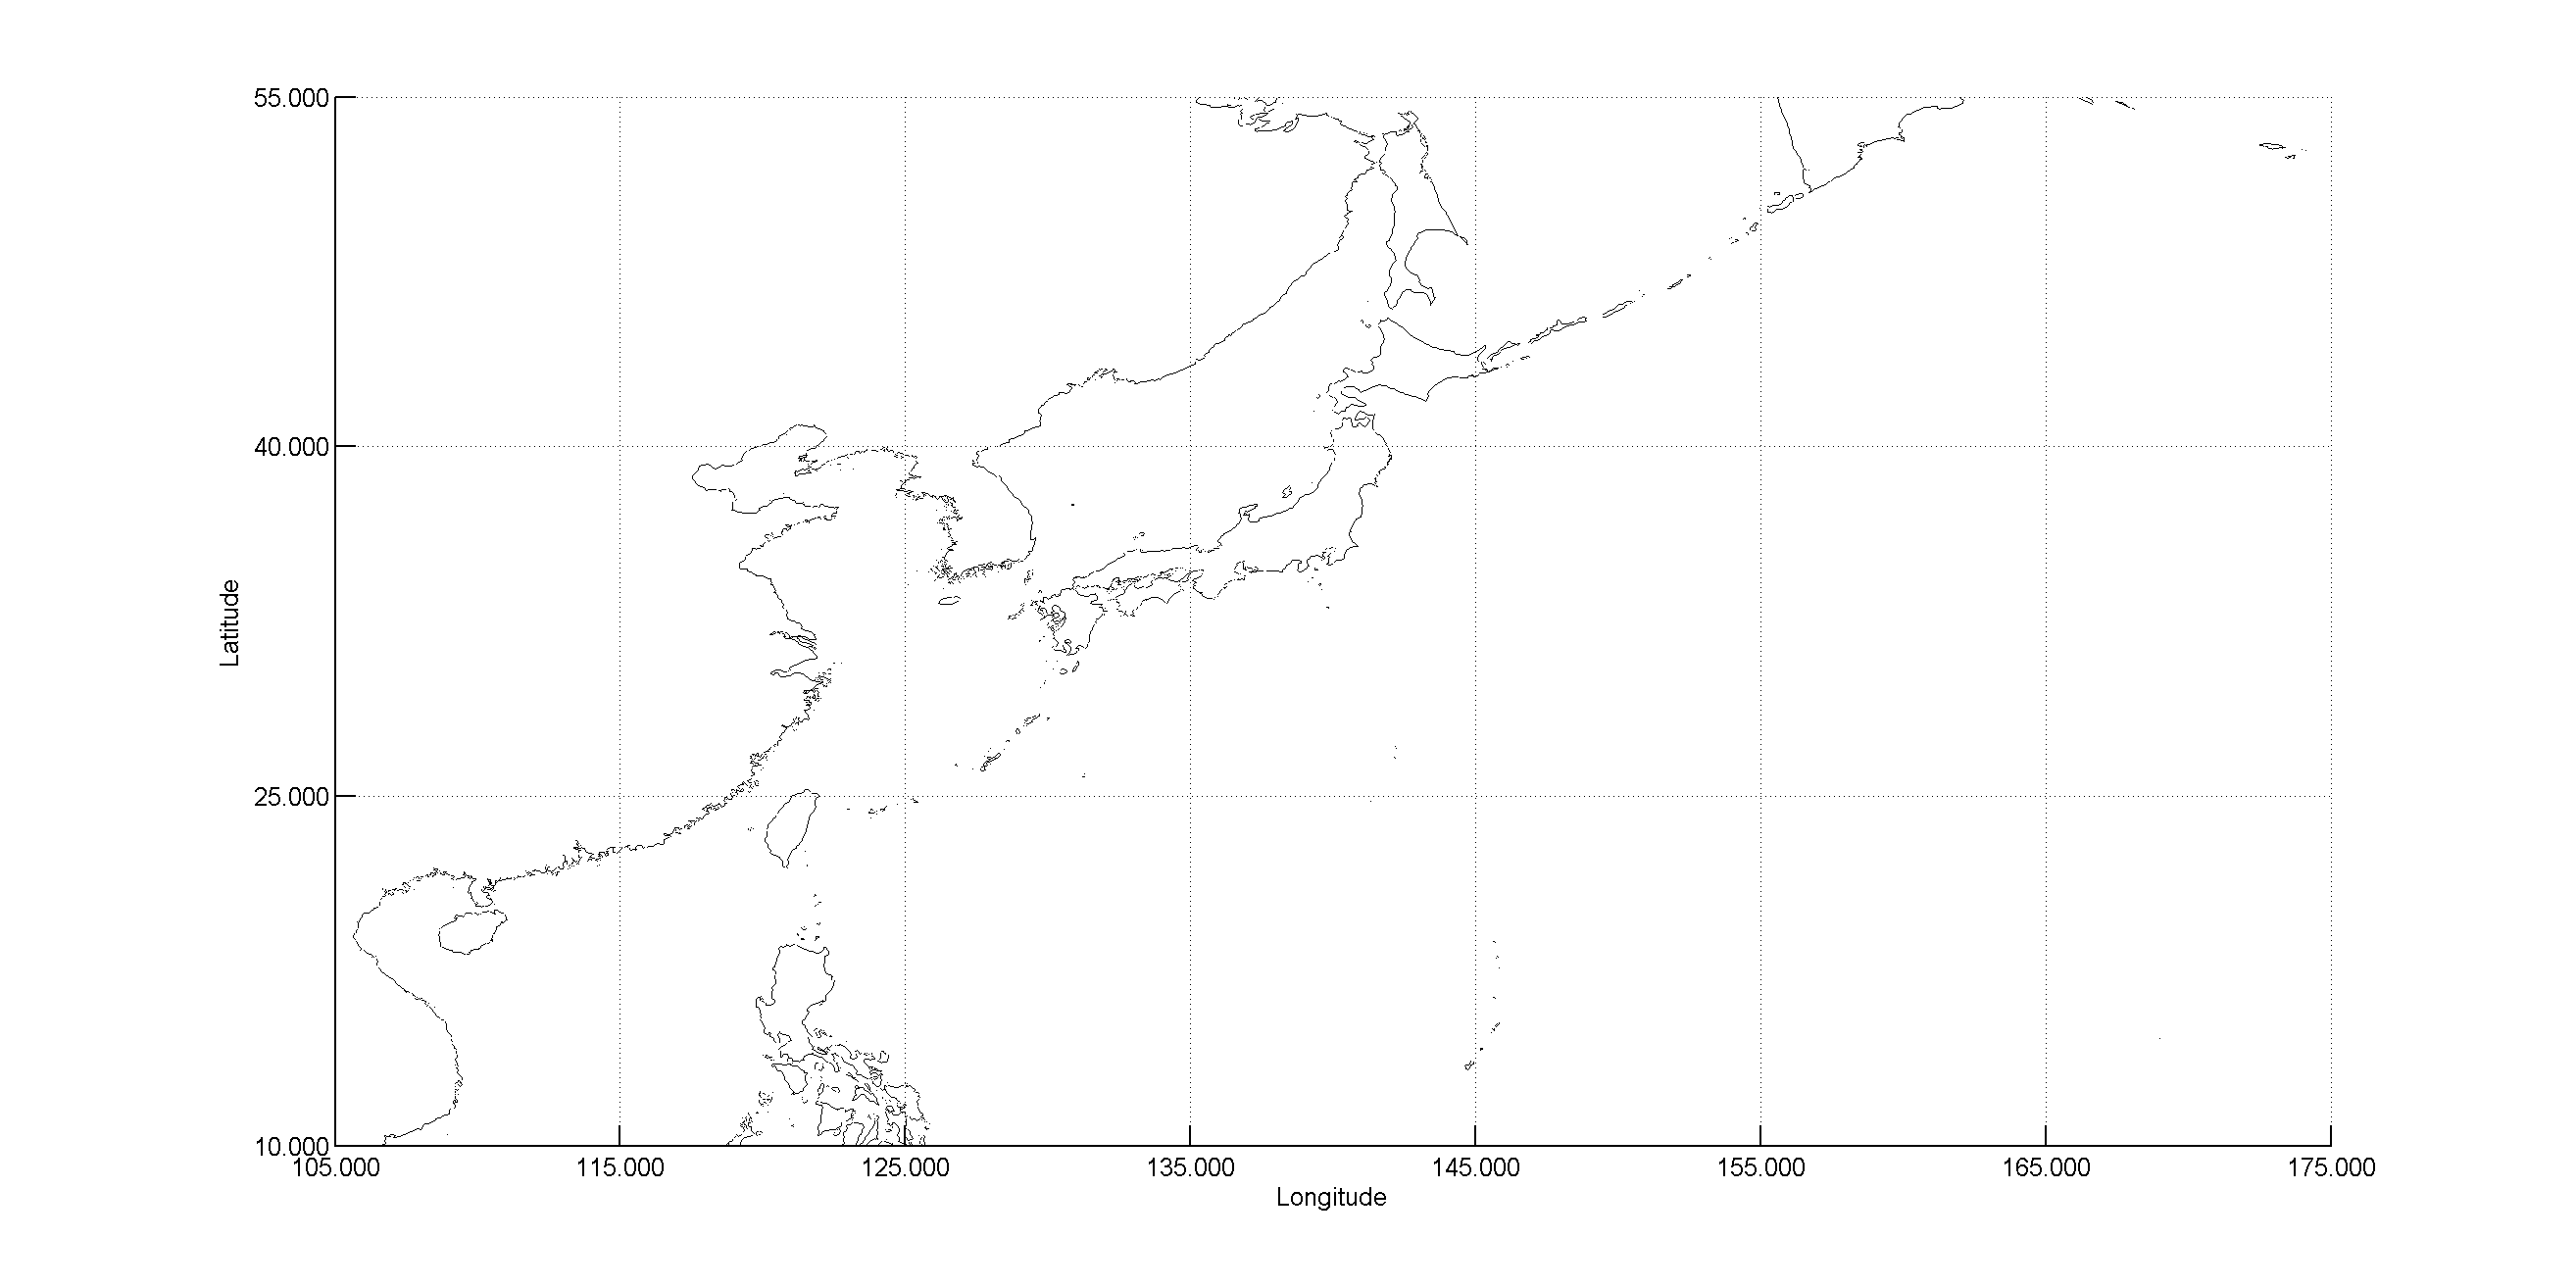 CYCLE_137 - Japan Ascending passes